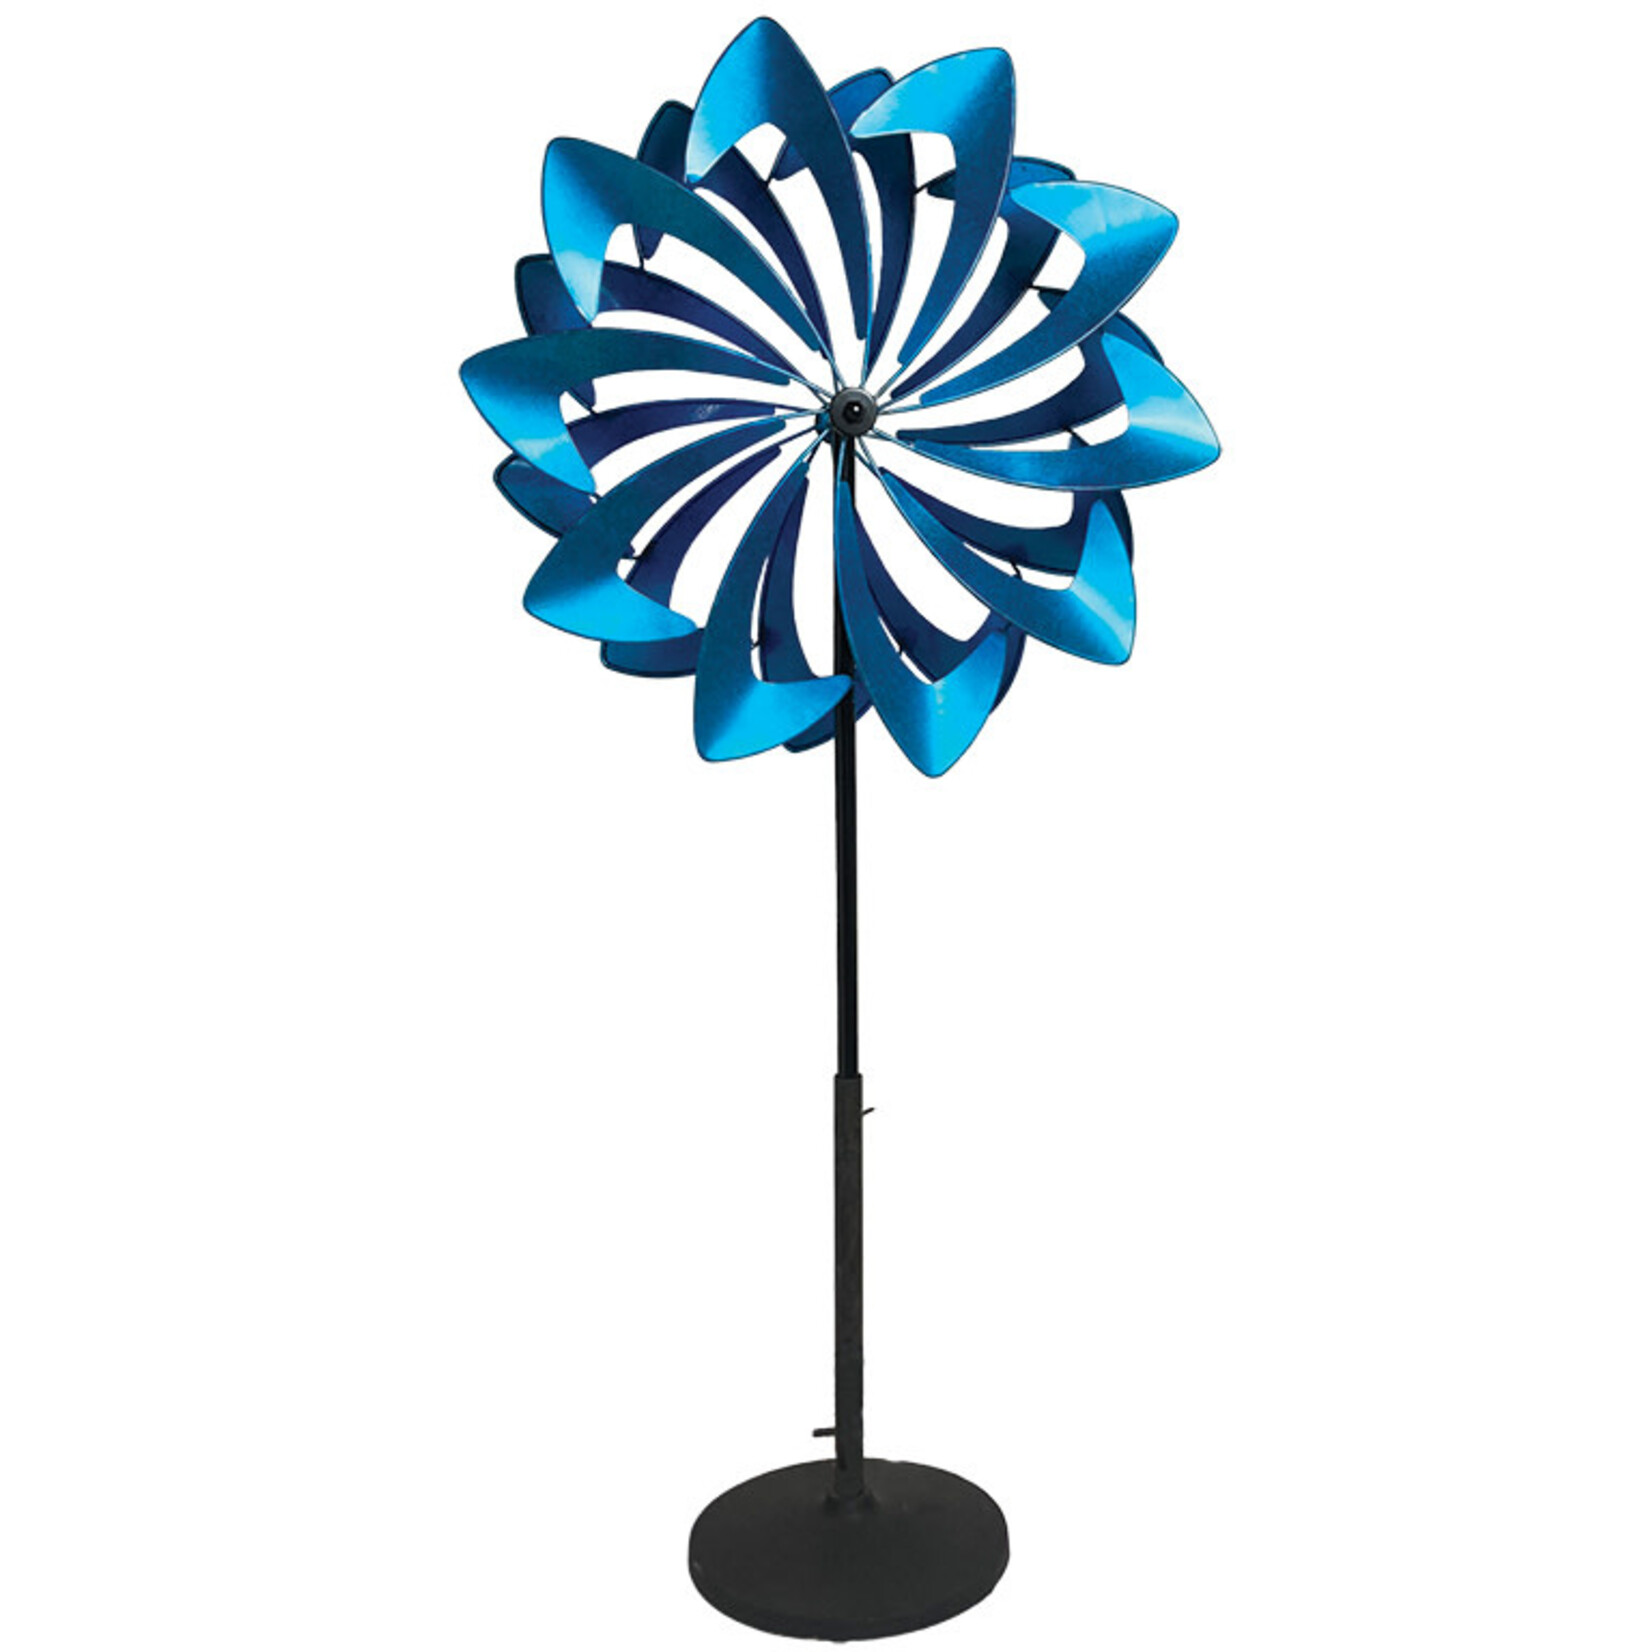 Kinetic Wind Spinner Stake - Blue Flower